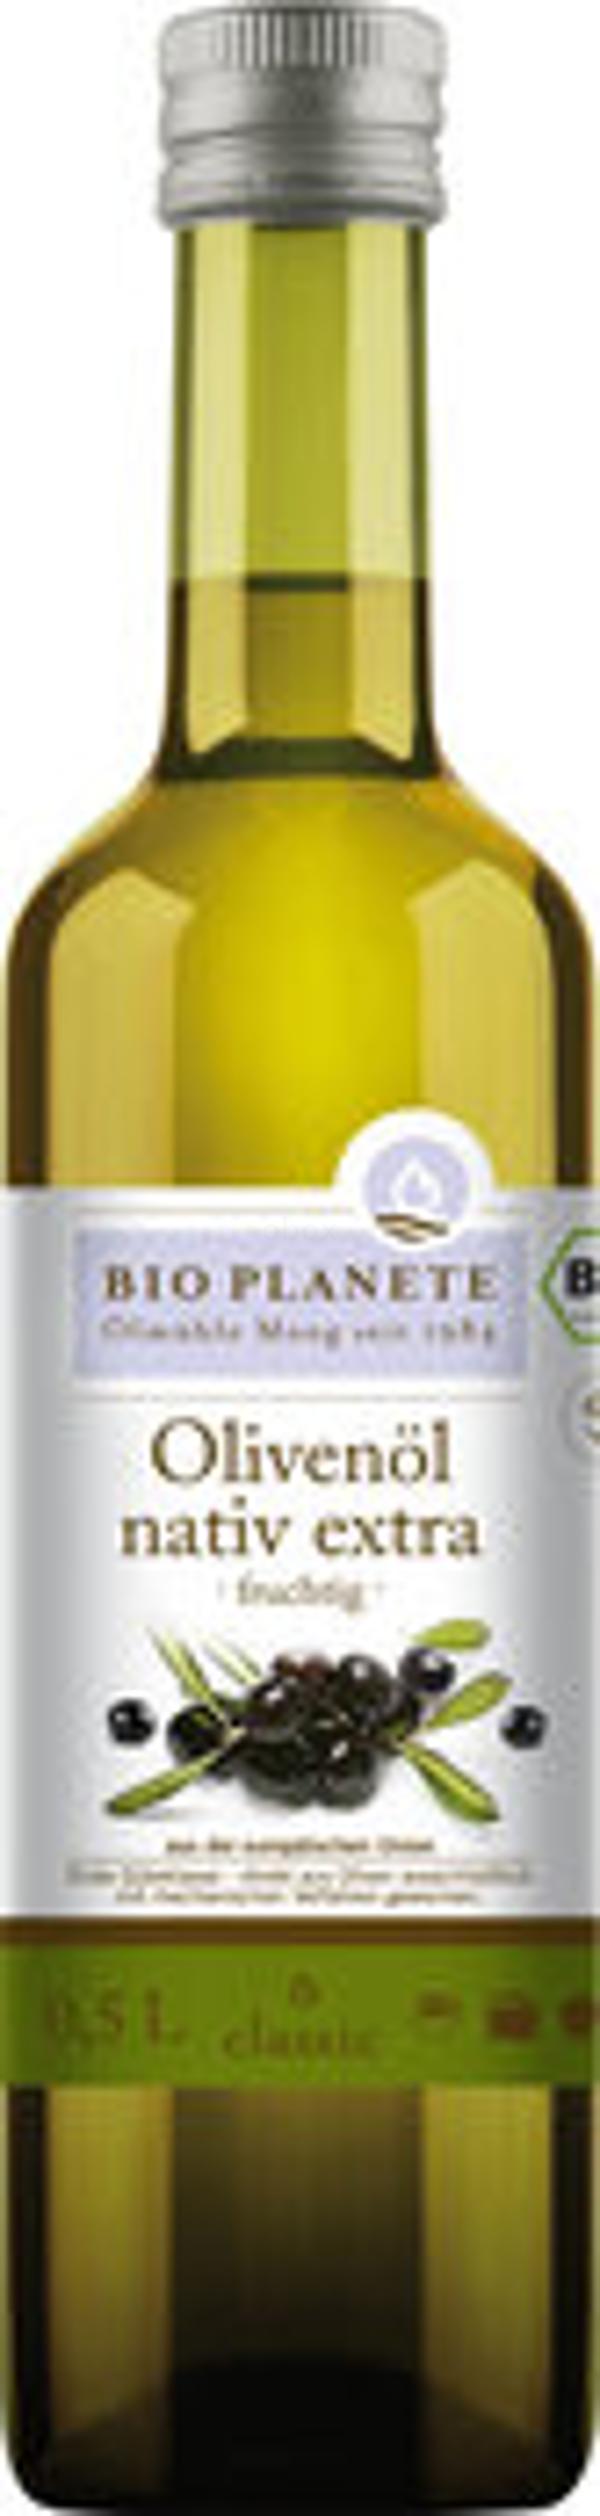 Produktfoto zu Olivenöl fruchtig nativ extra 0,5l